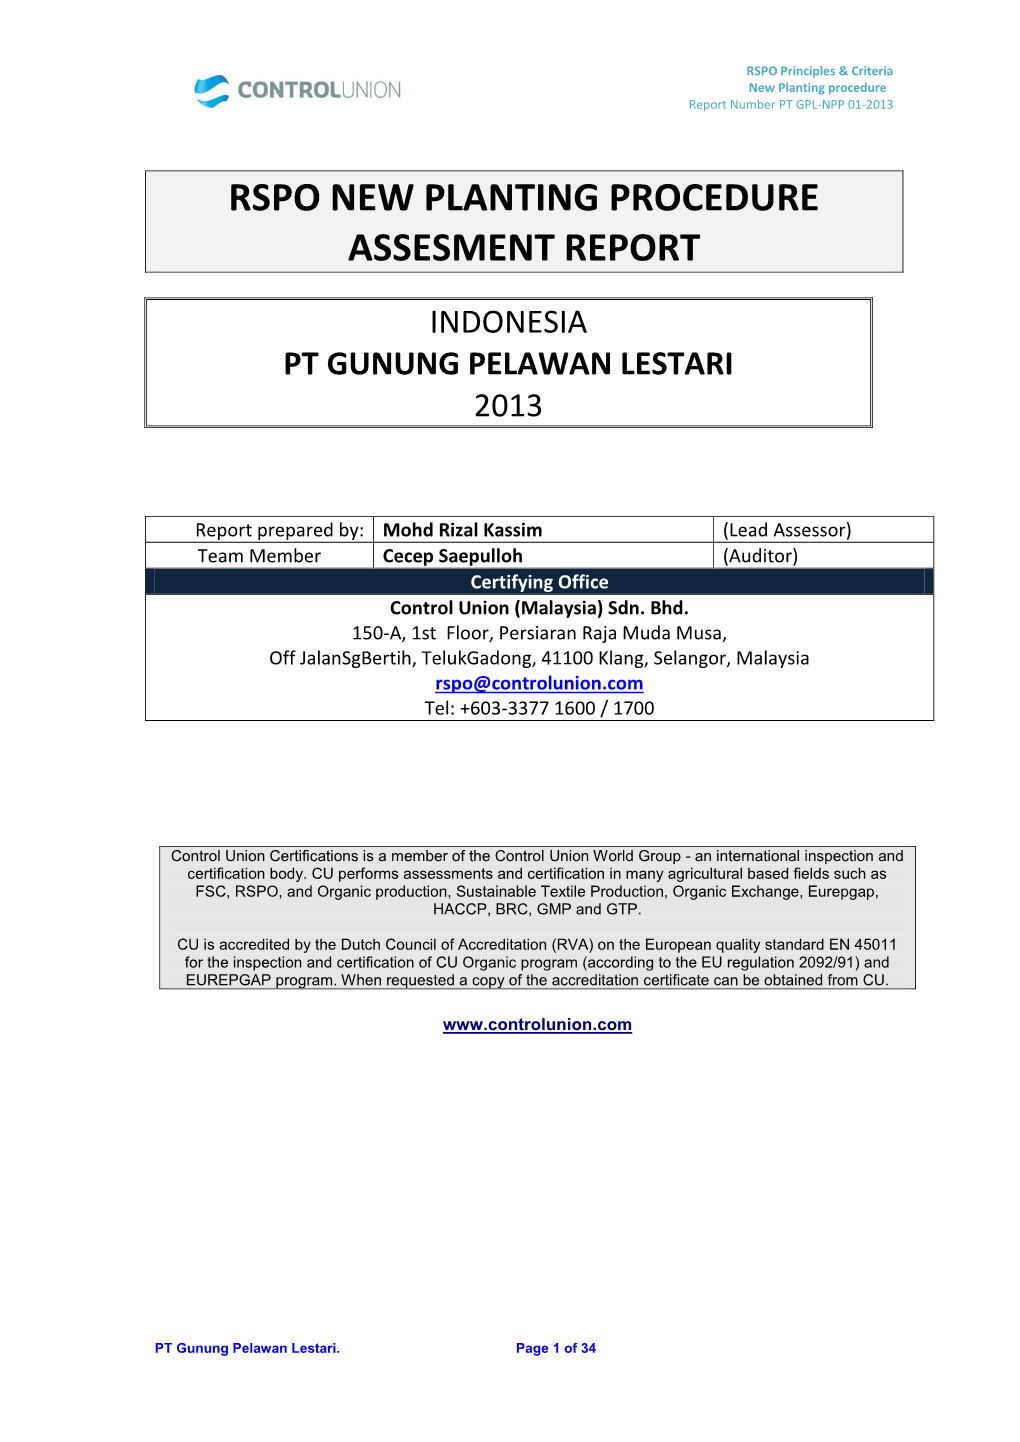 CB Assesment Report PT Gunung Pelawan Lestari 2013.Pdf